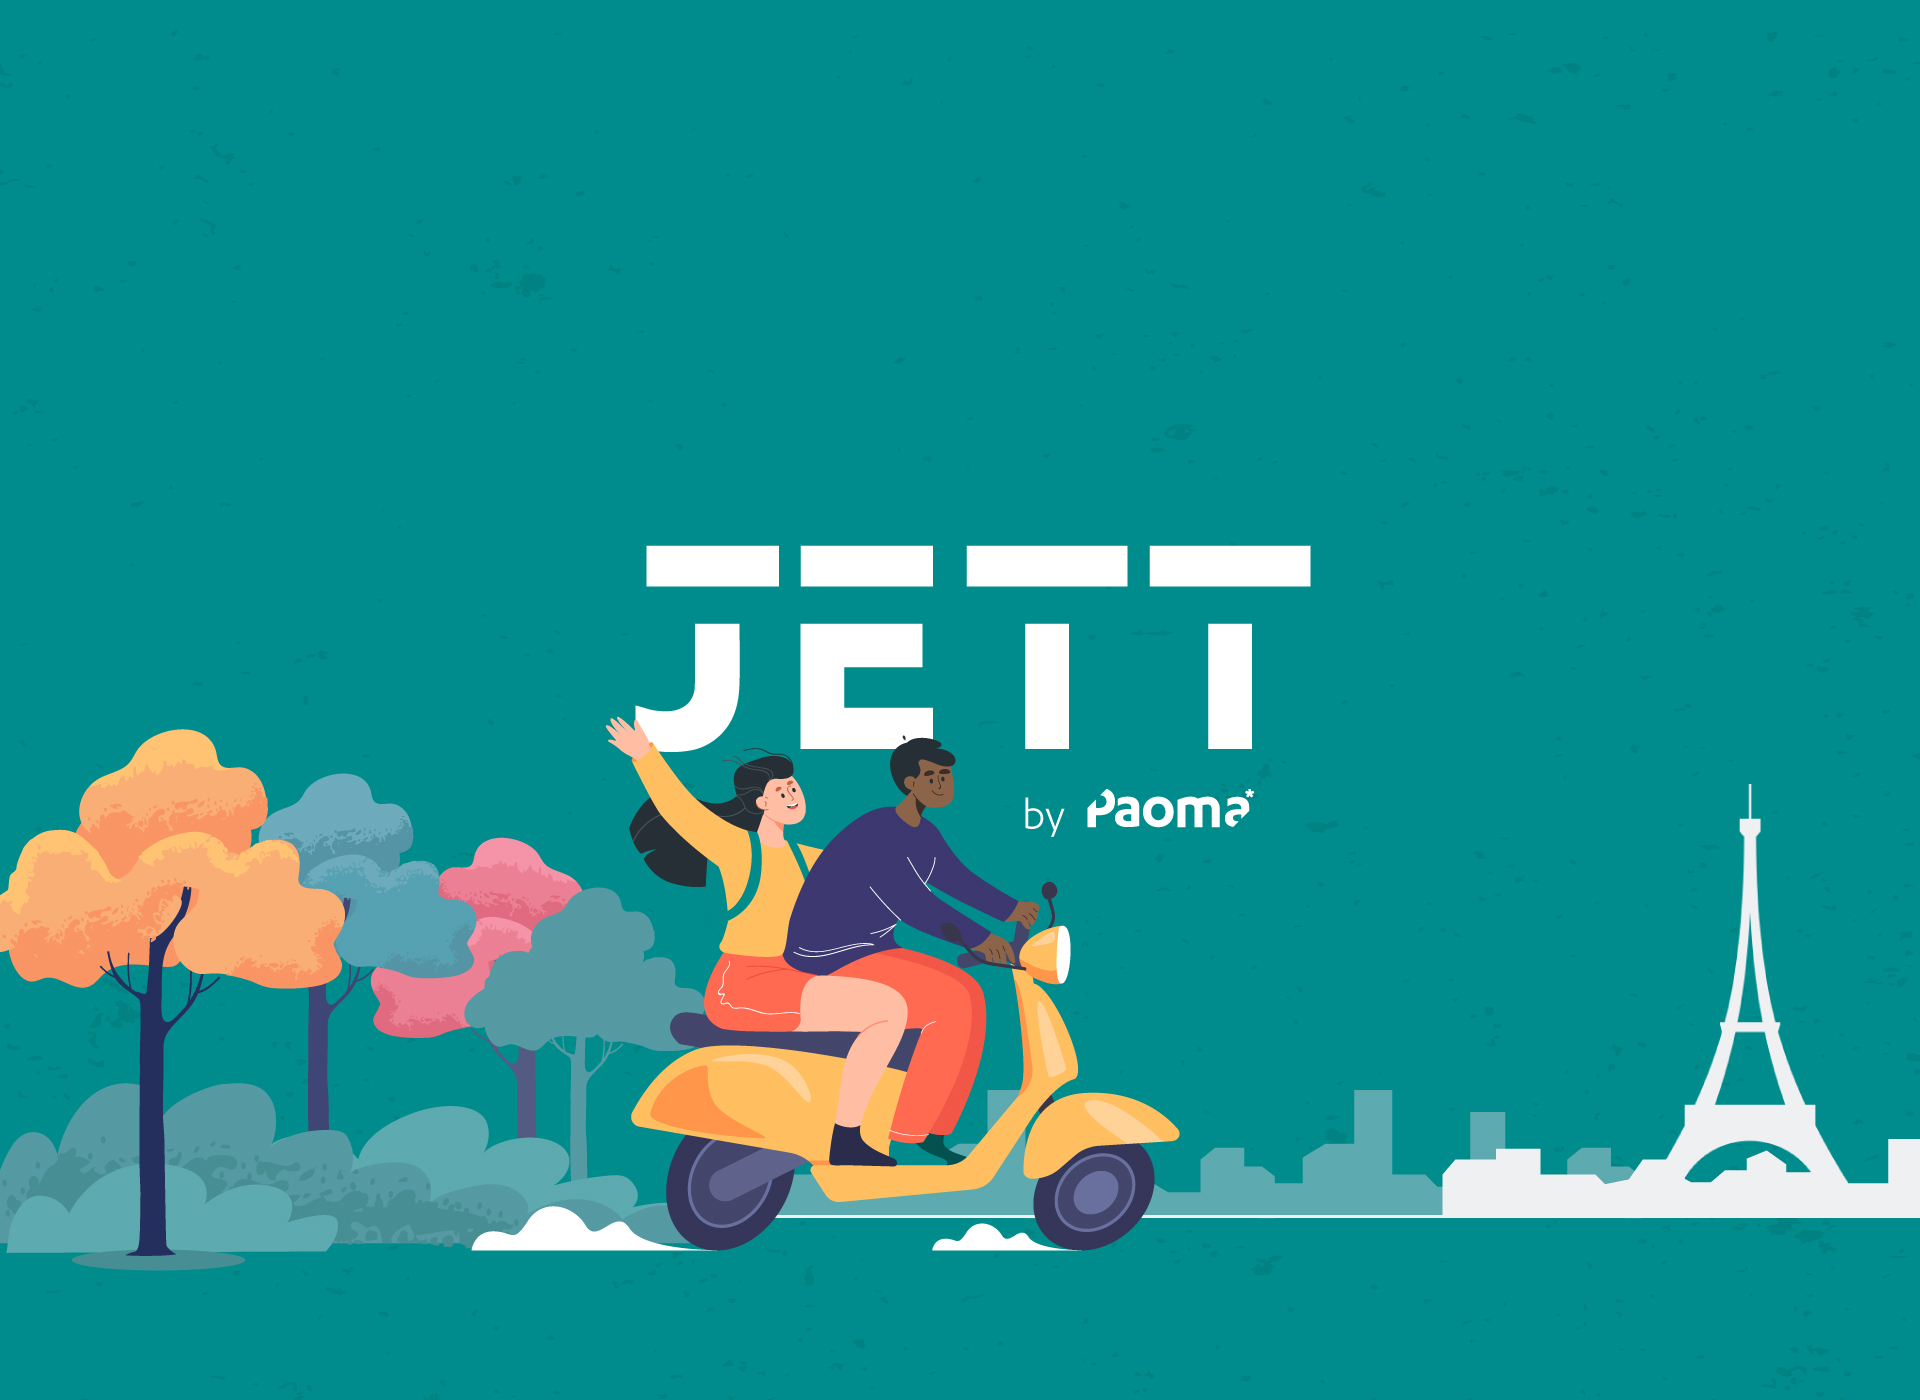 Couverture JETT I by PAOMA® Agence de marketing Digitale